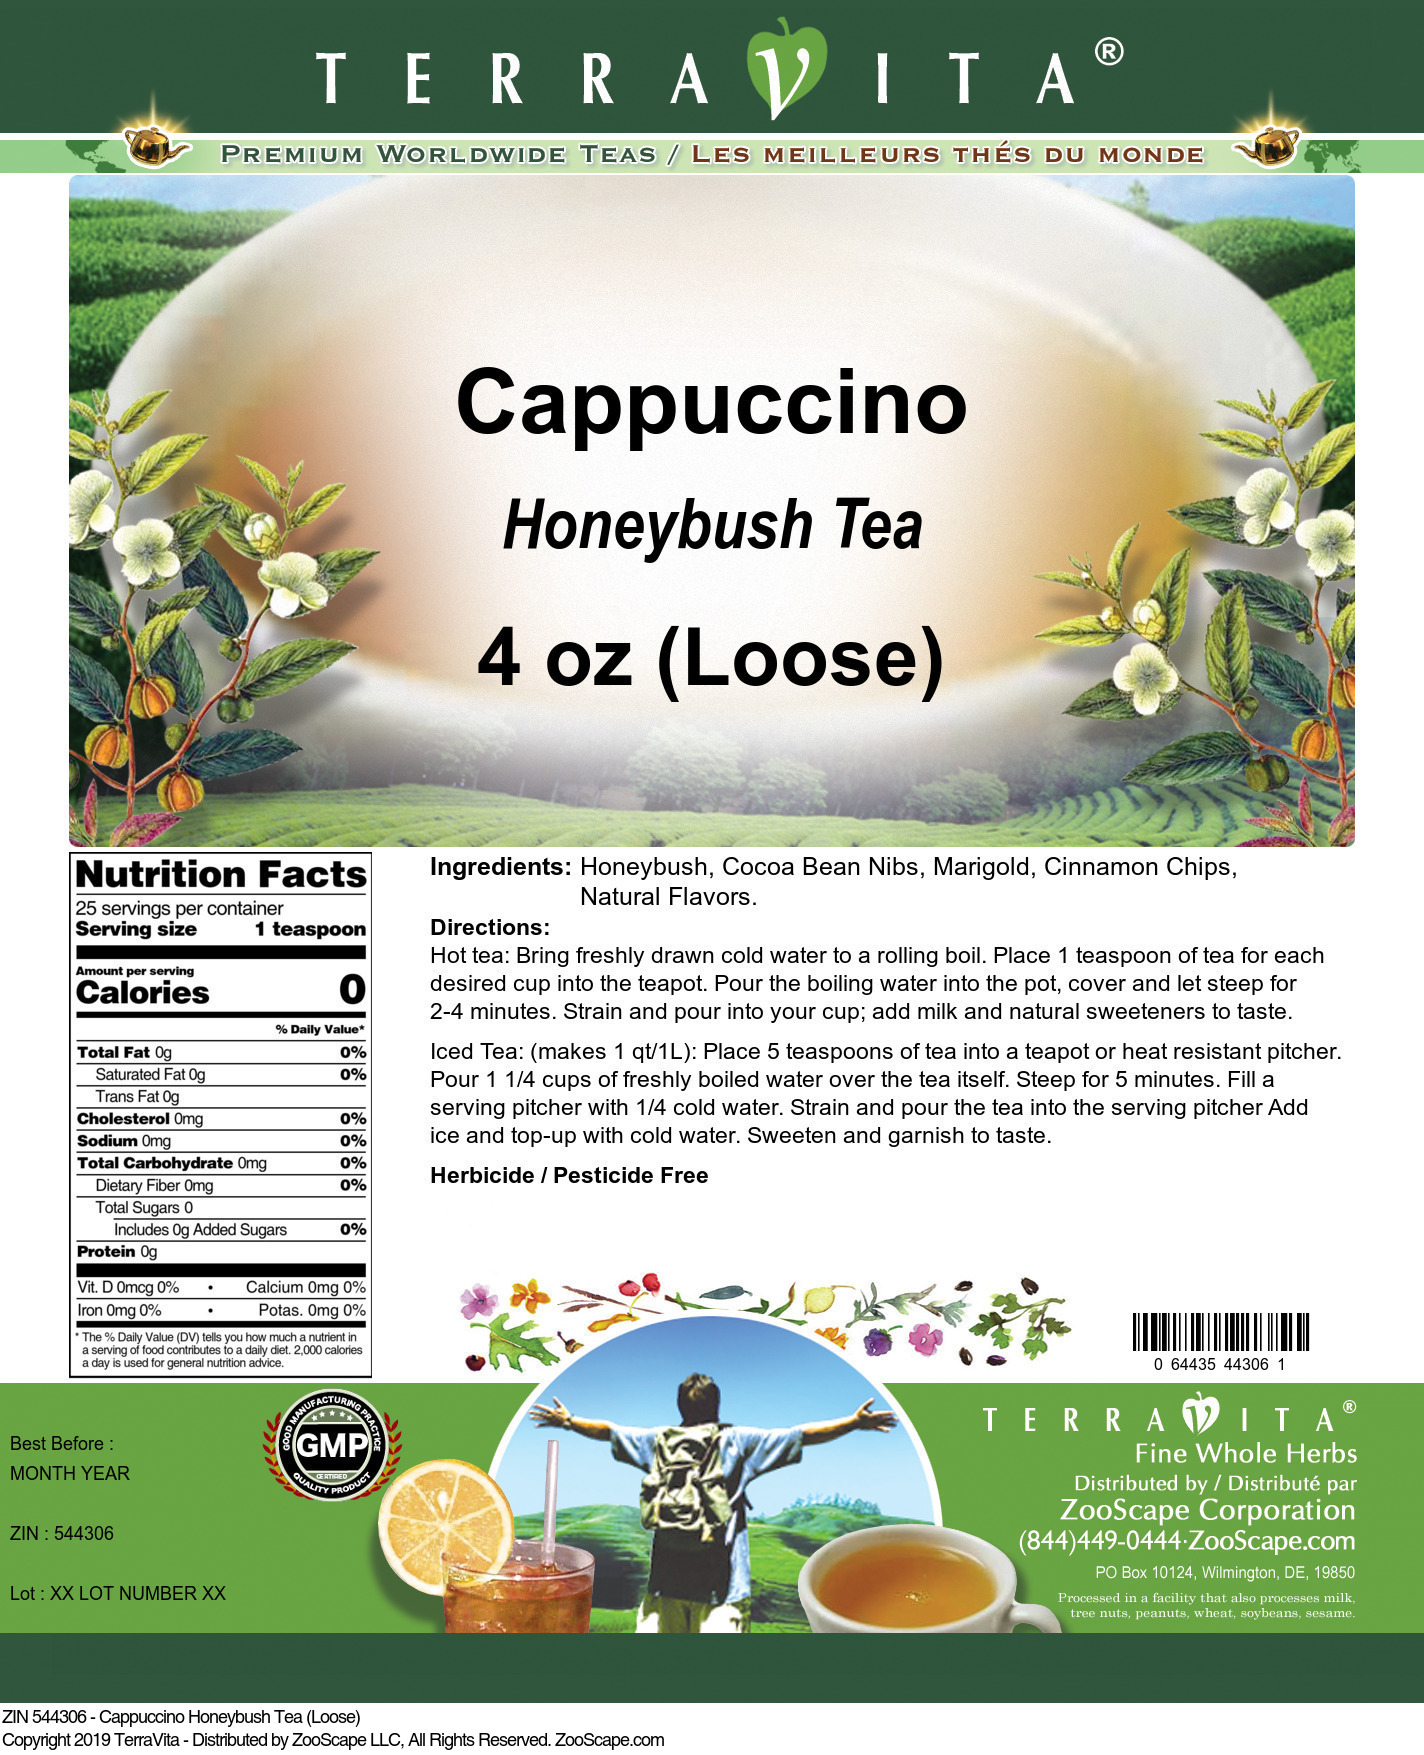 Cappuccino Honeybush Tea (Loose) - Label